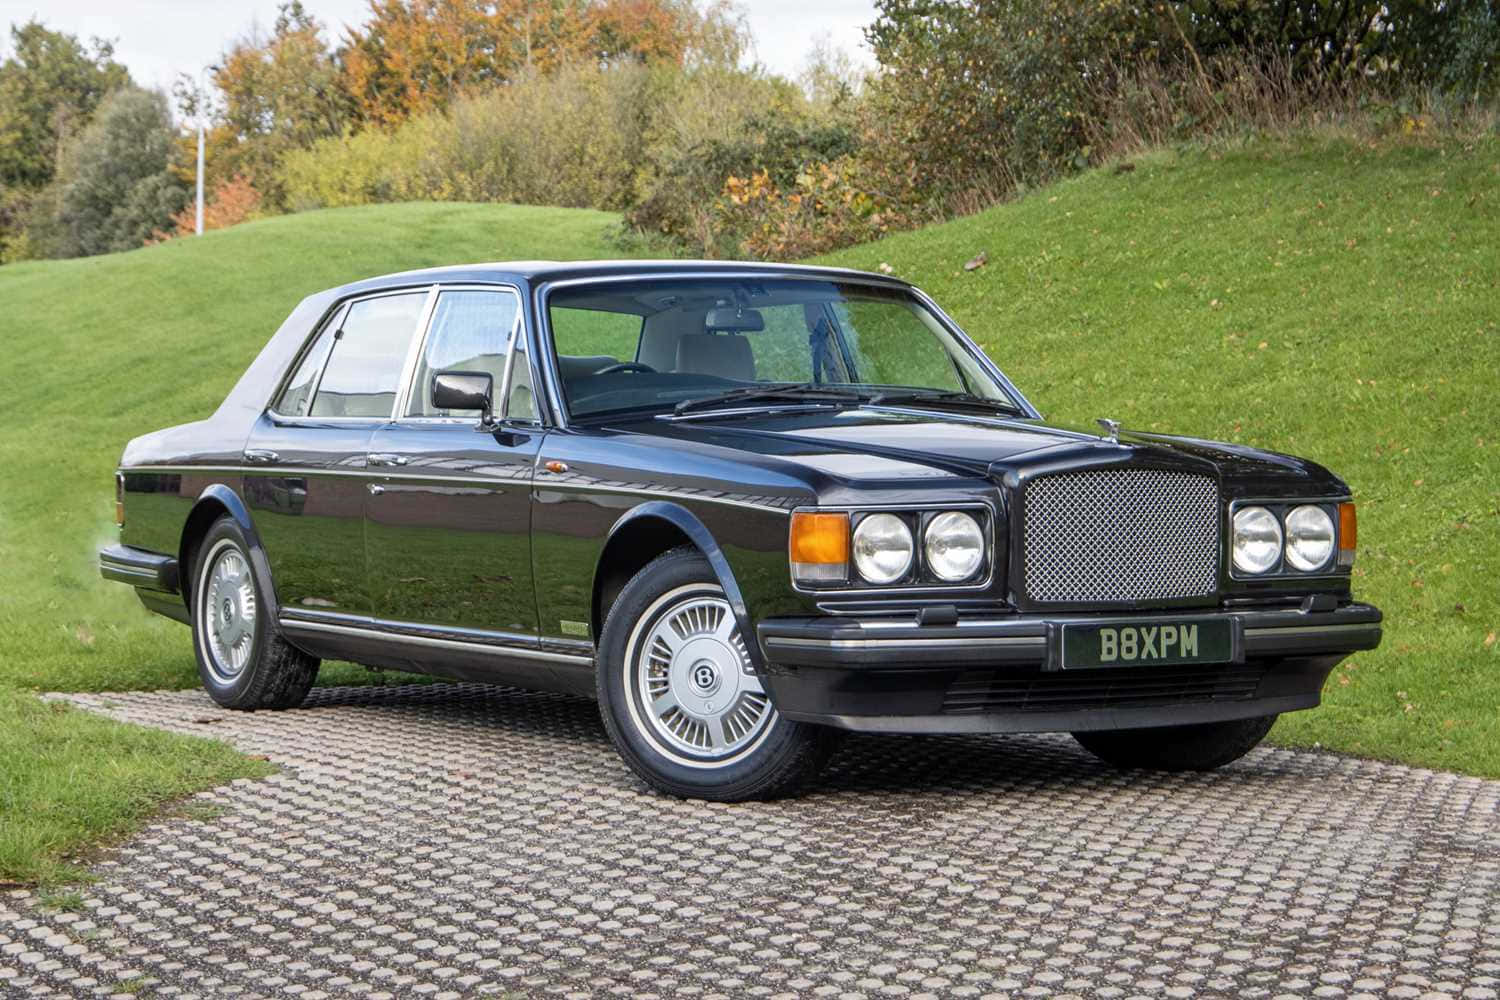 Caption: A luxurious classic - Bentley Eight Wallpaper